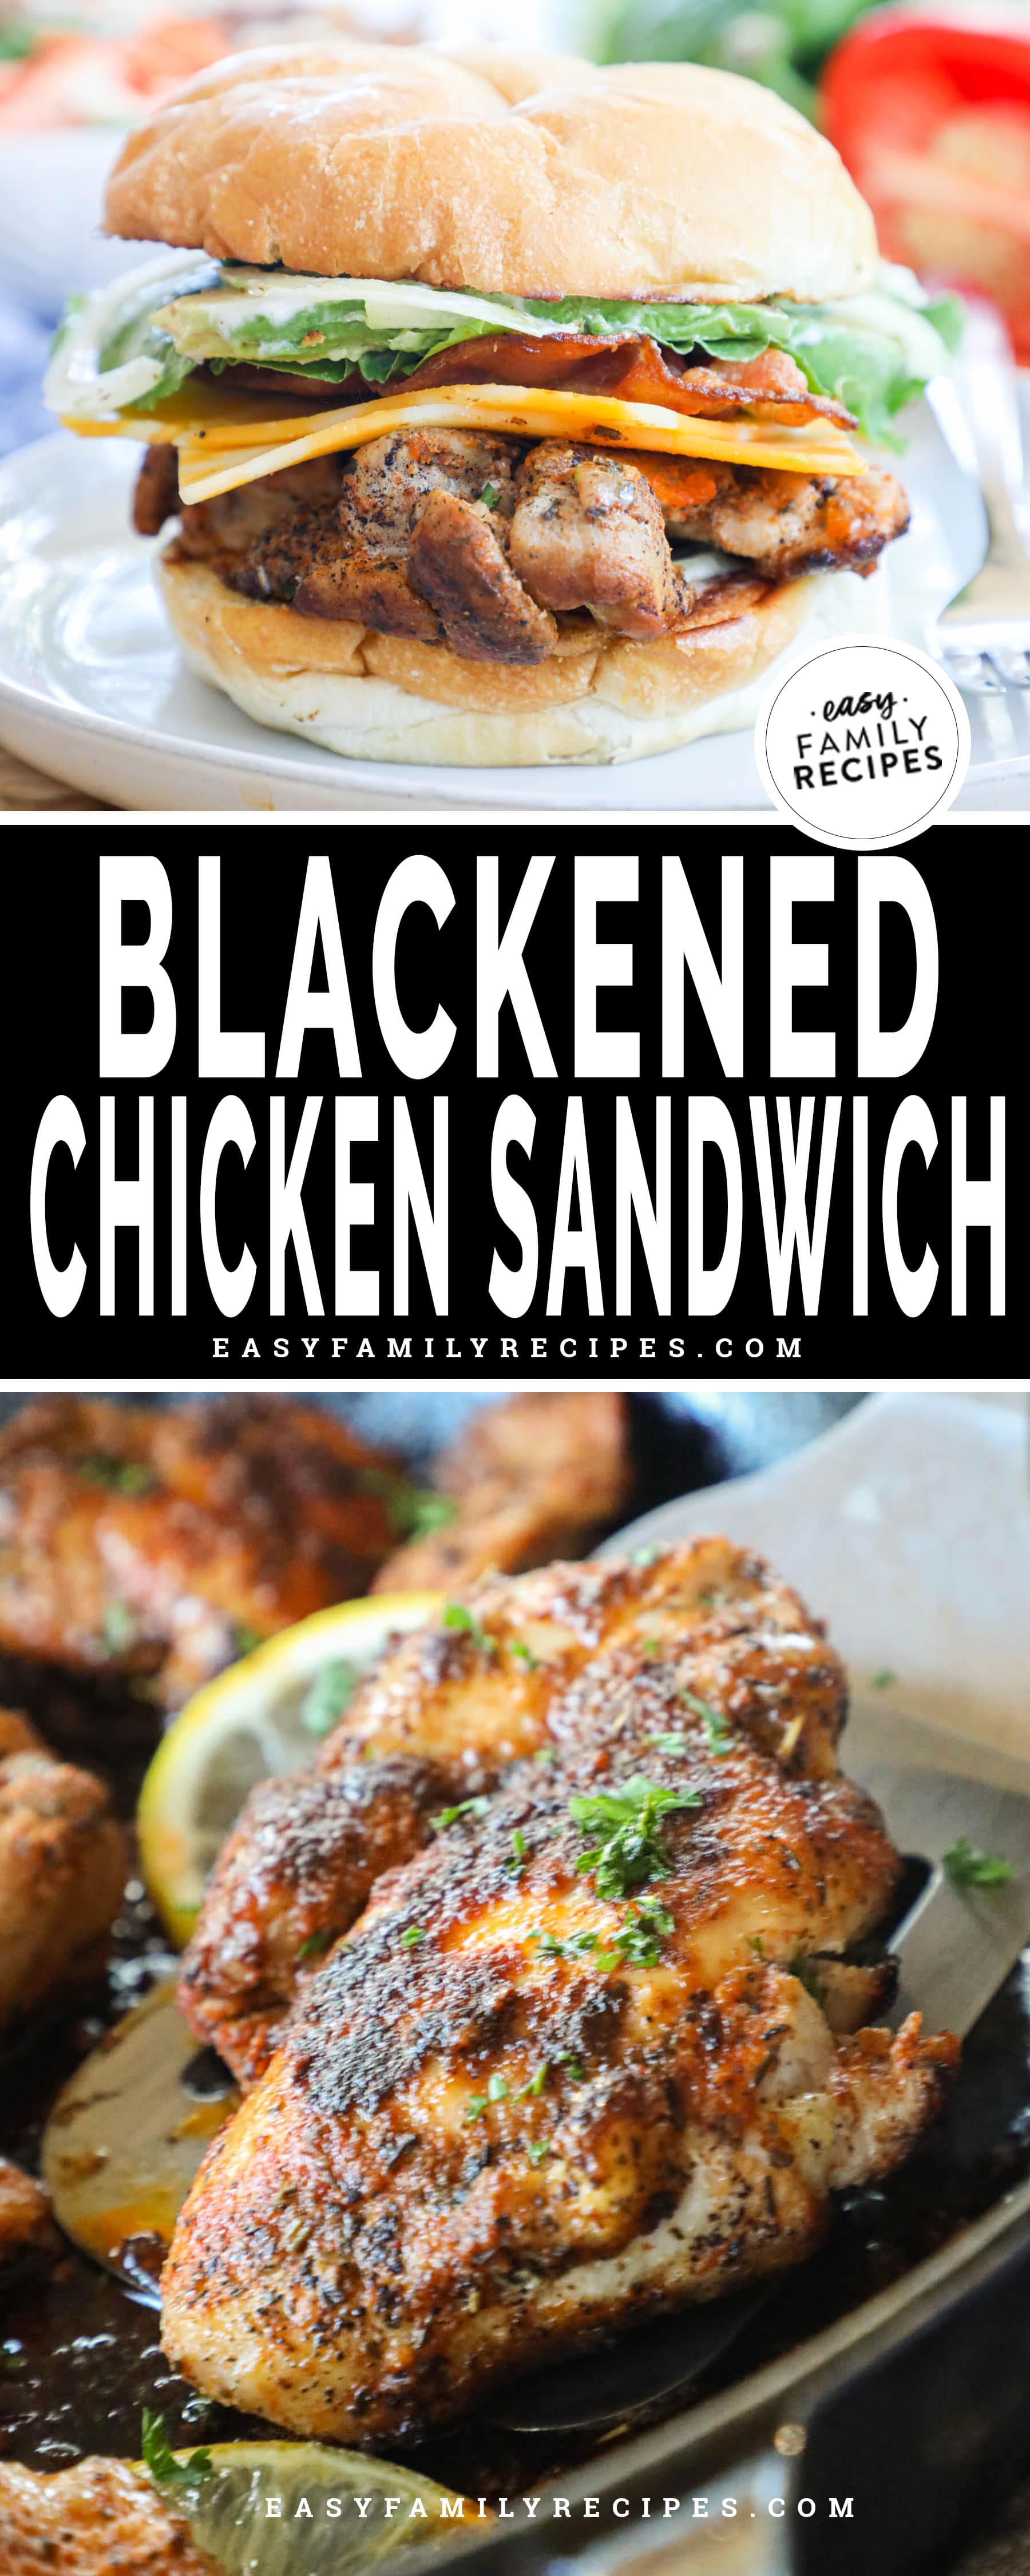 Blackened chicken sandwich pin.